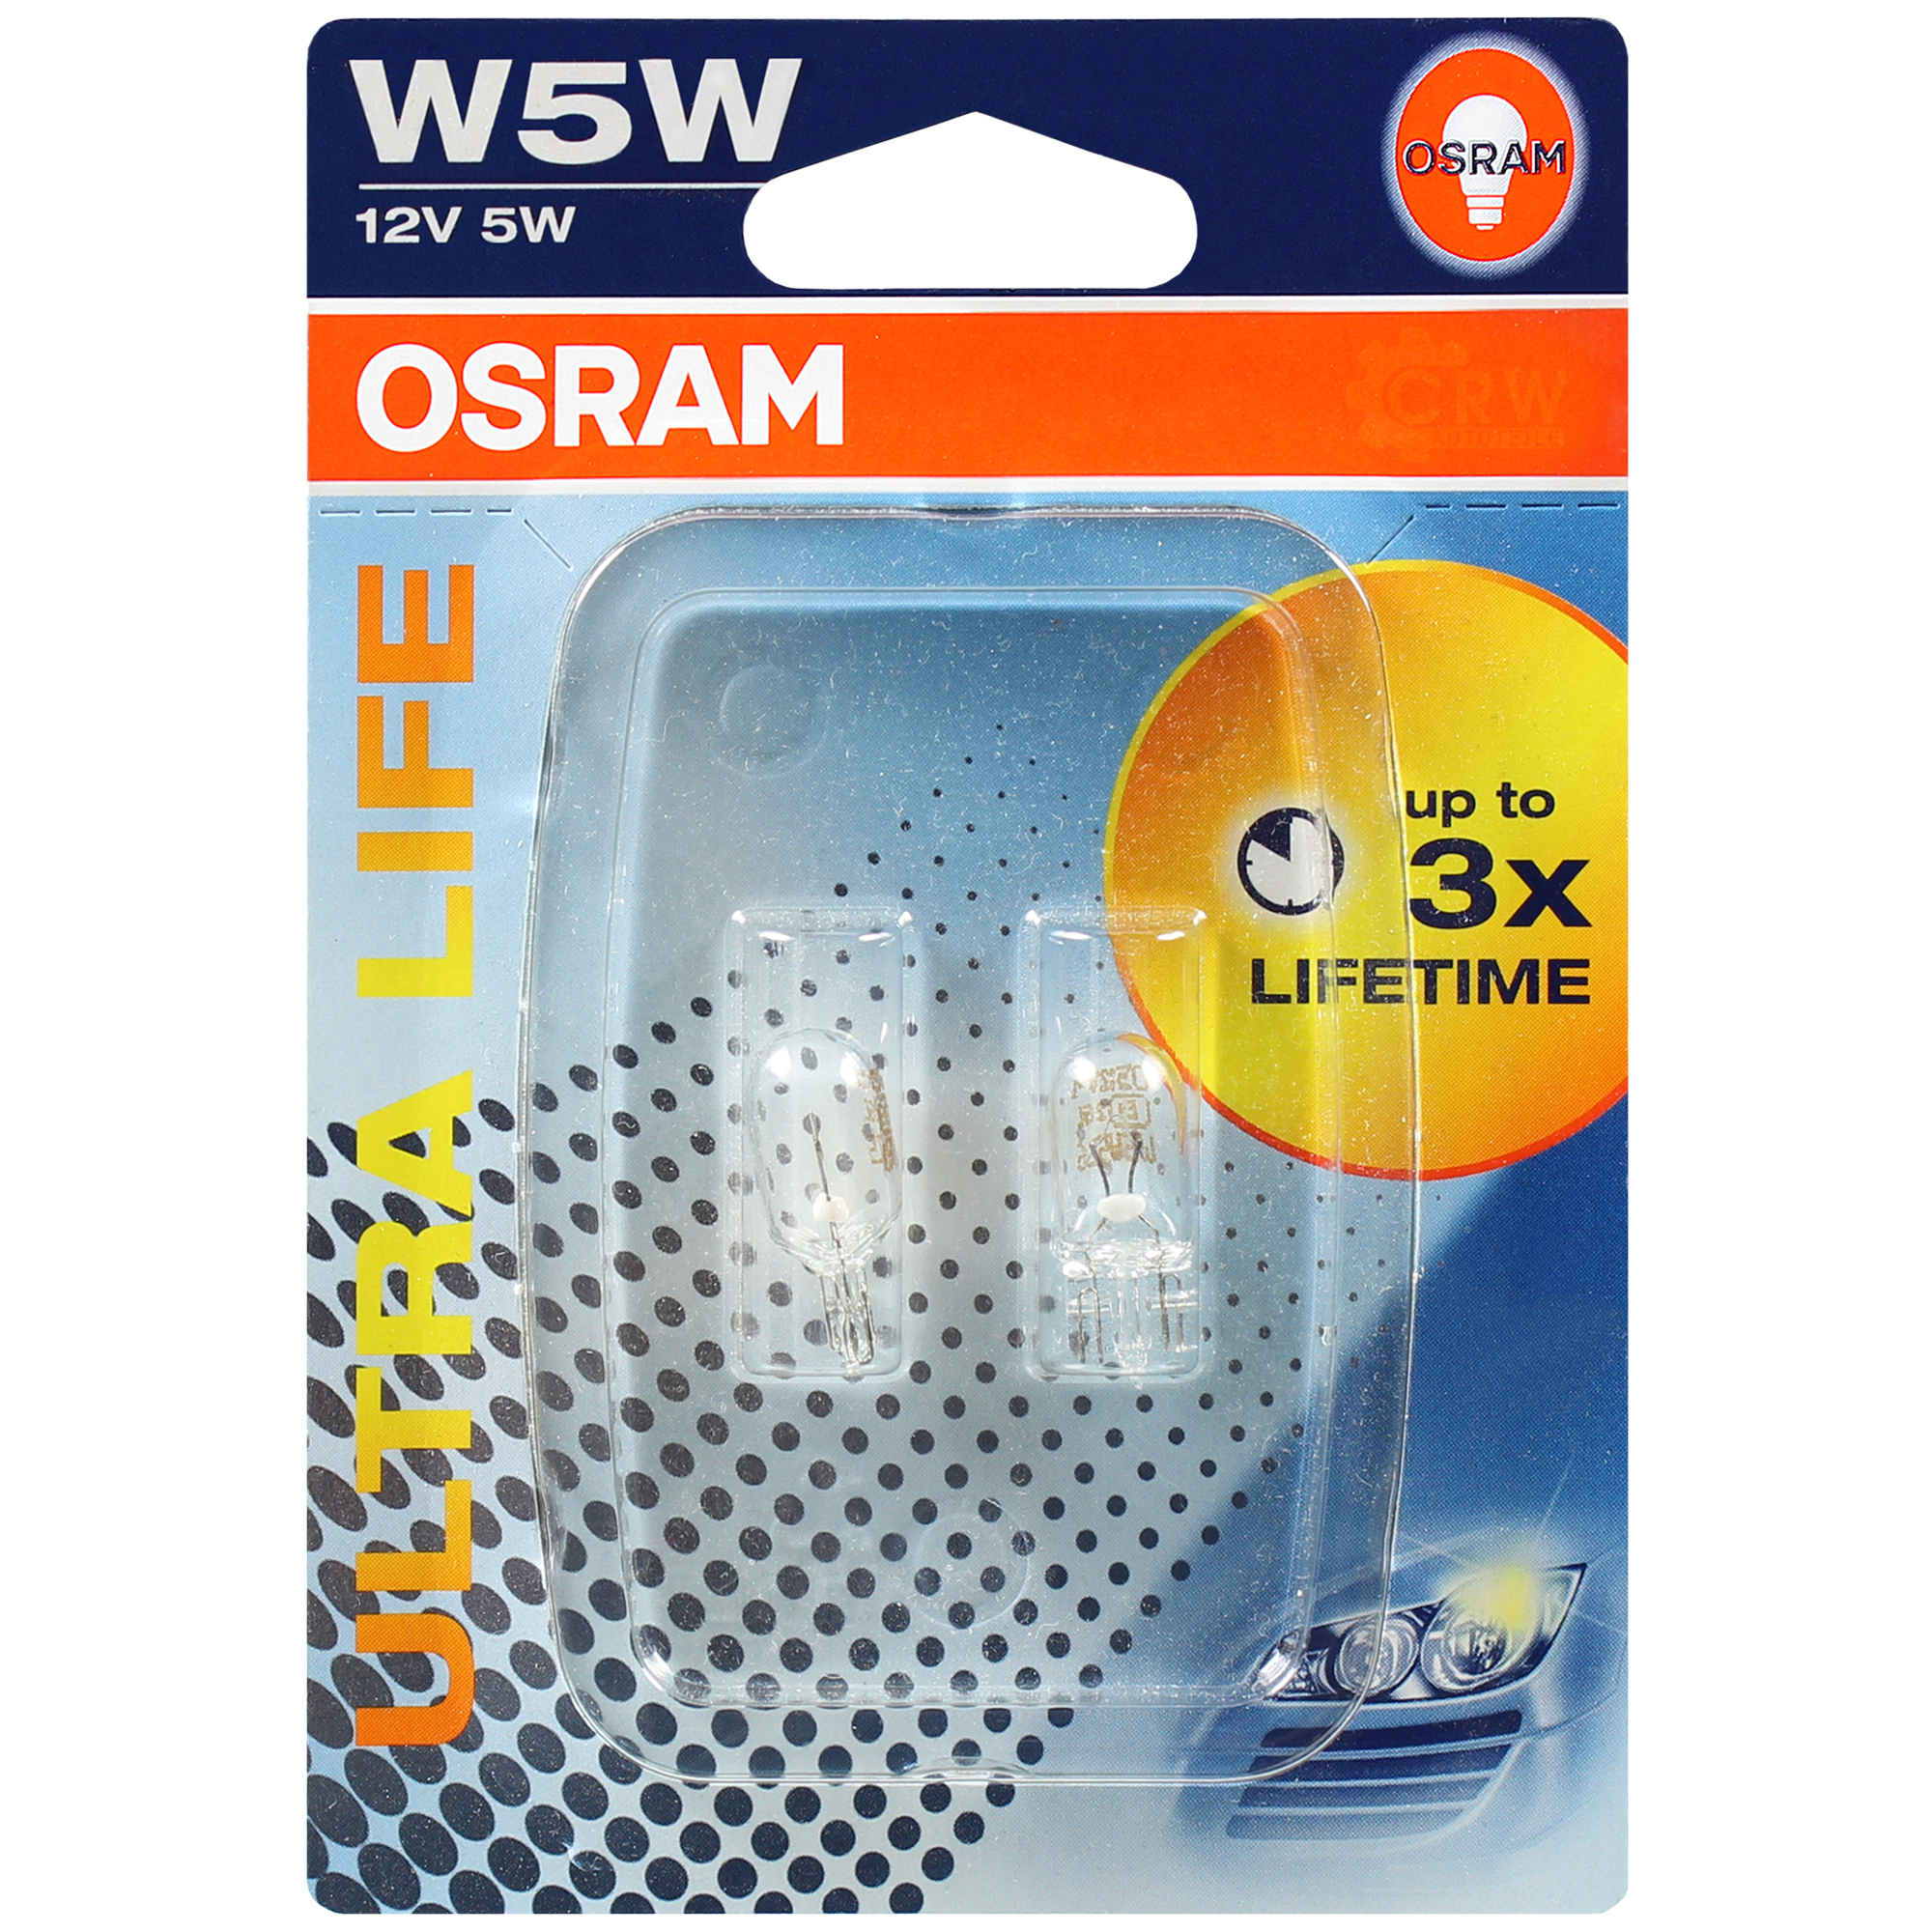 OSRAM W5W 12V 5W Halogen Ultra LIFE Blister Set 2 Stück Lampe Birne 2825ULT-02B